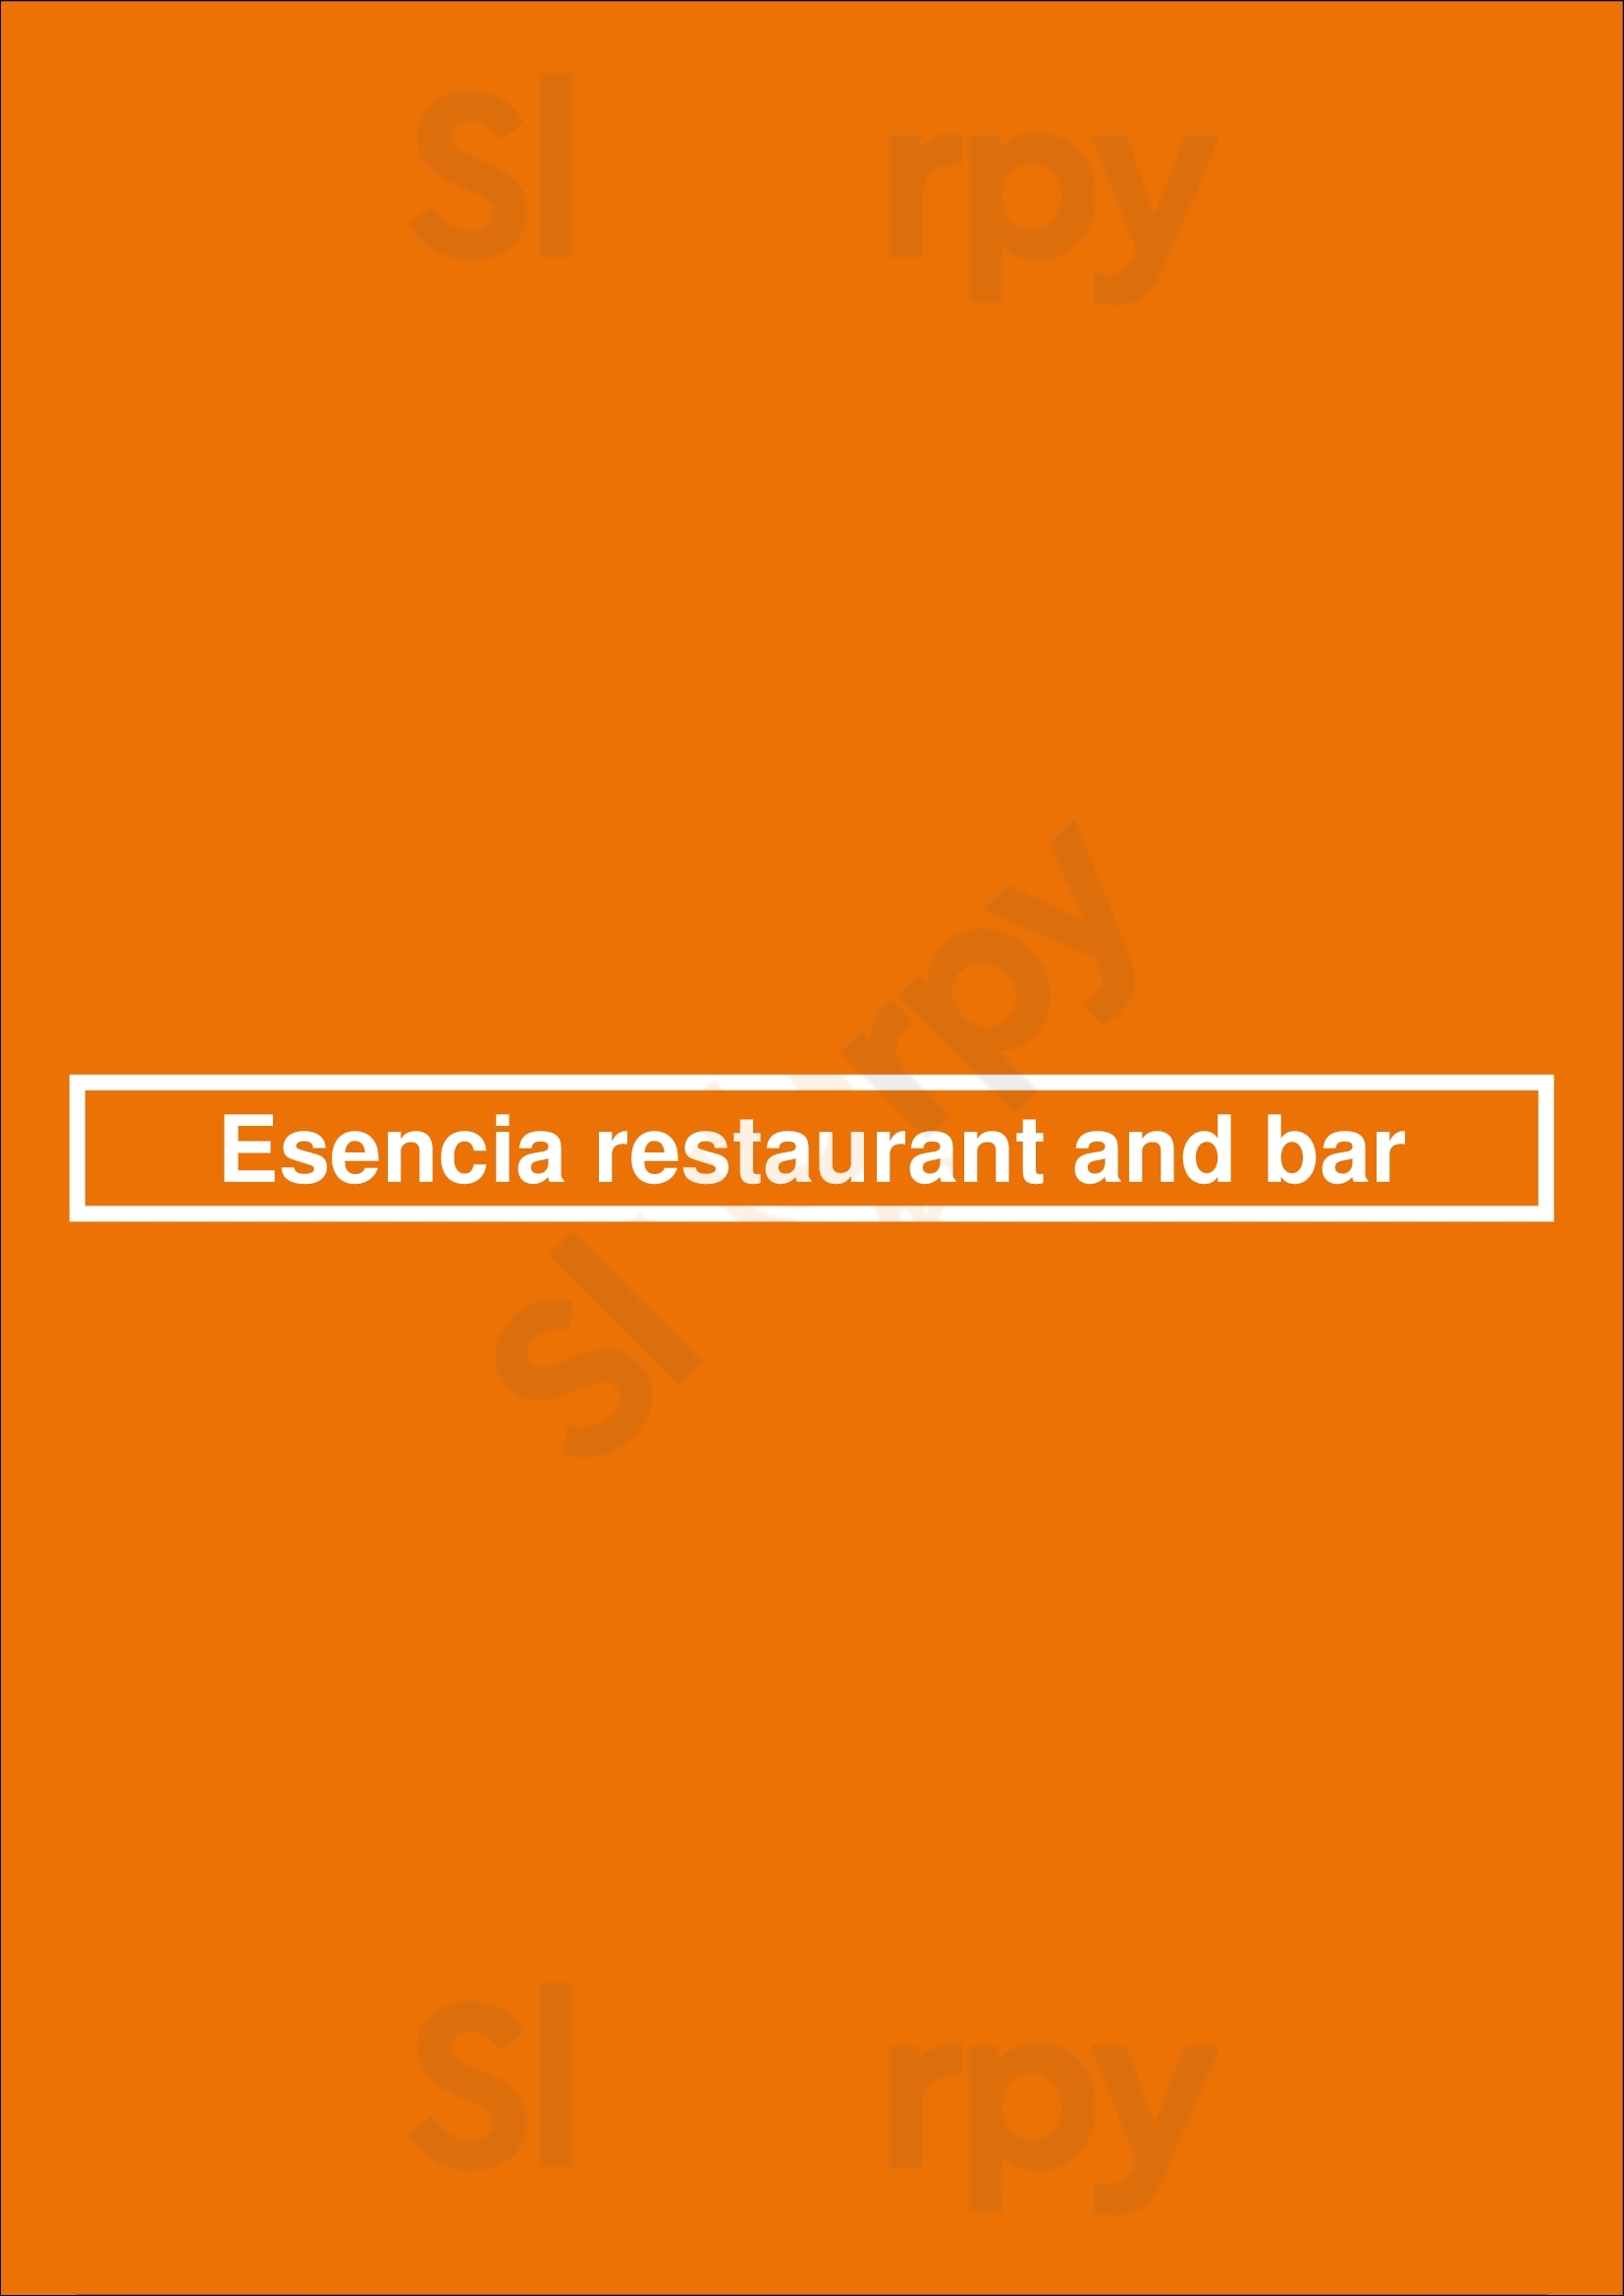 Esencia Restaurant And Bar San Juan Menu - 1